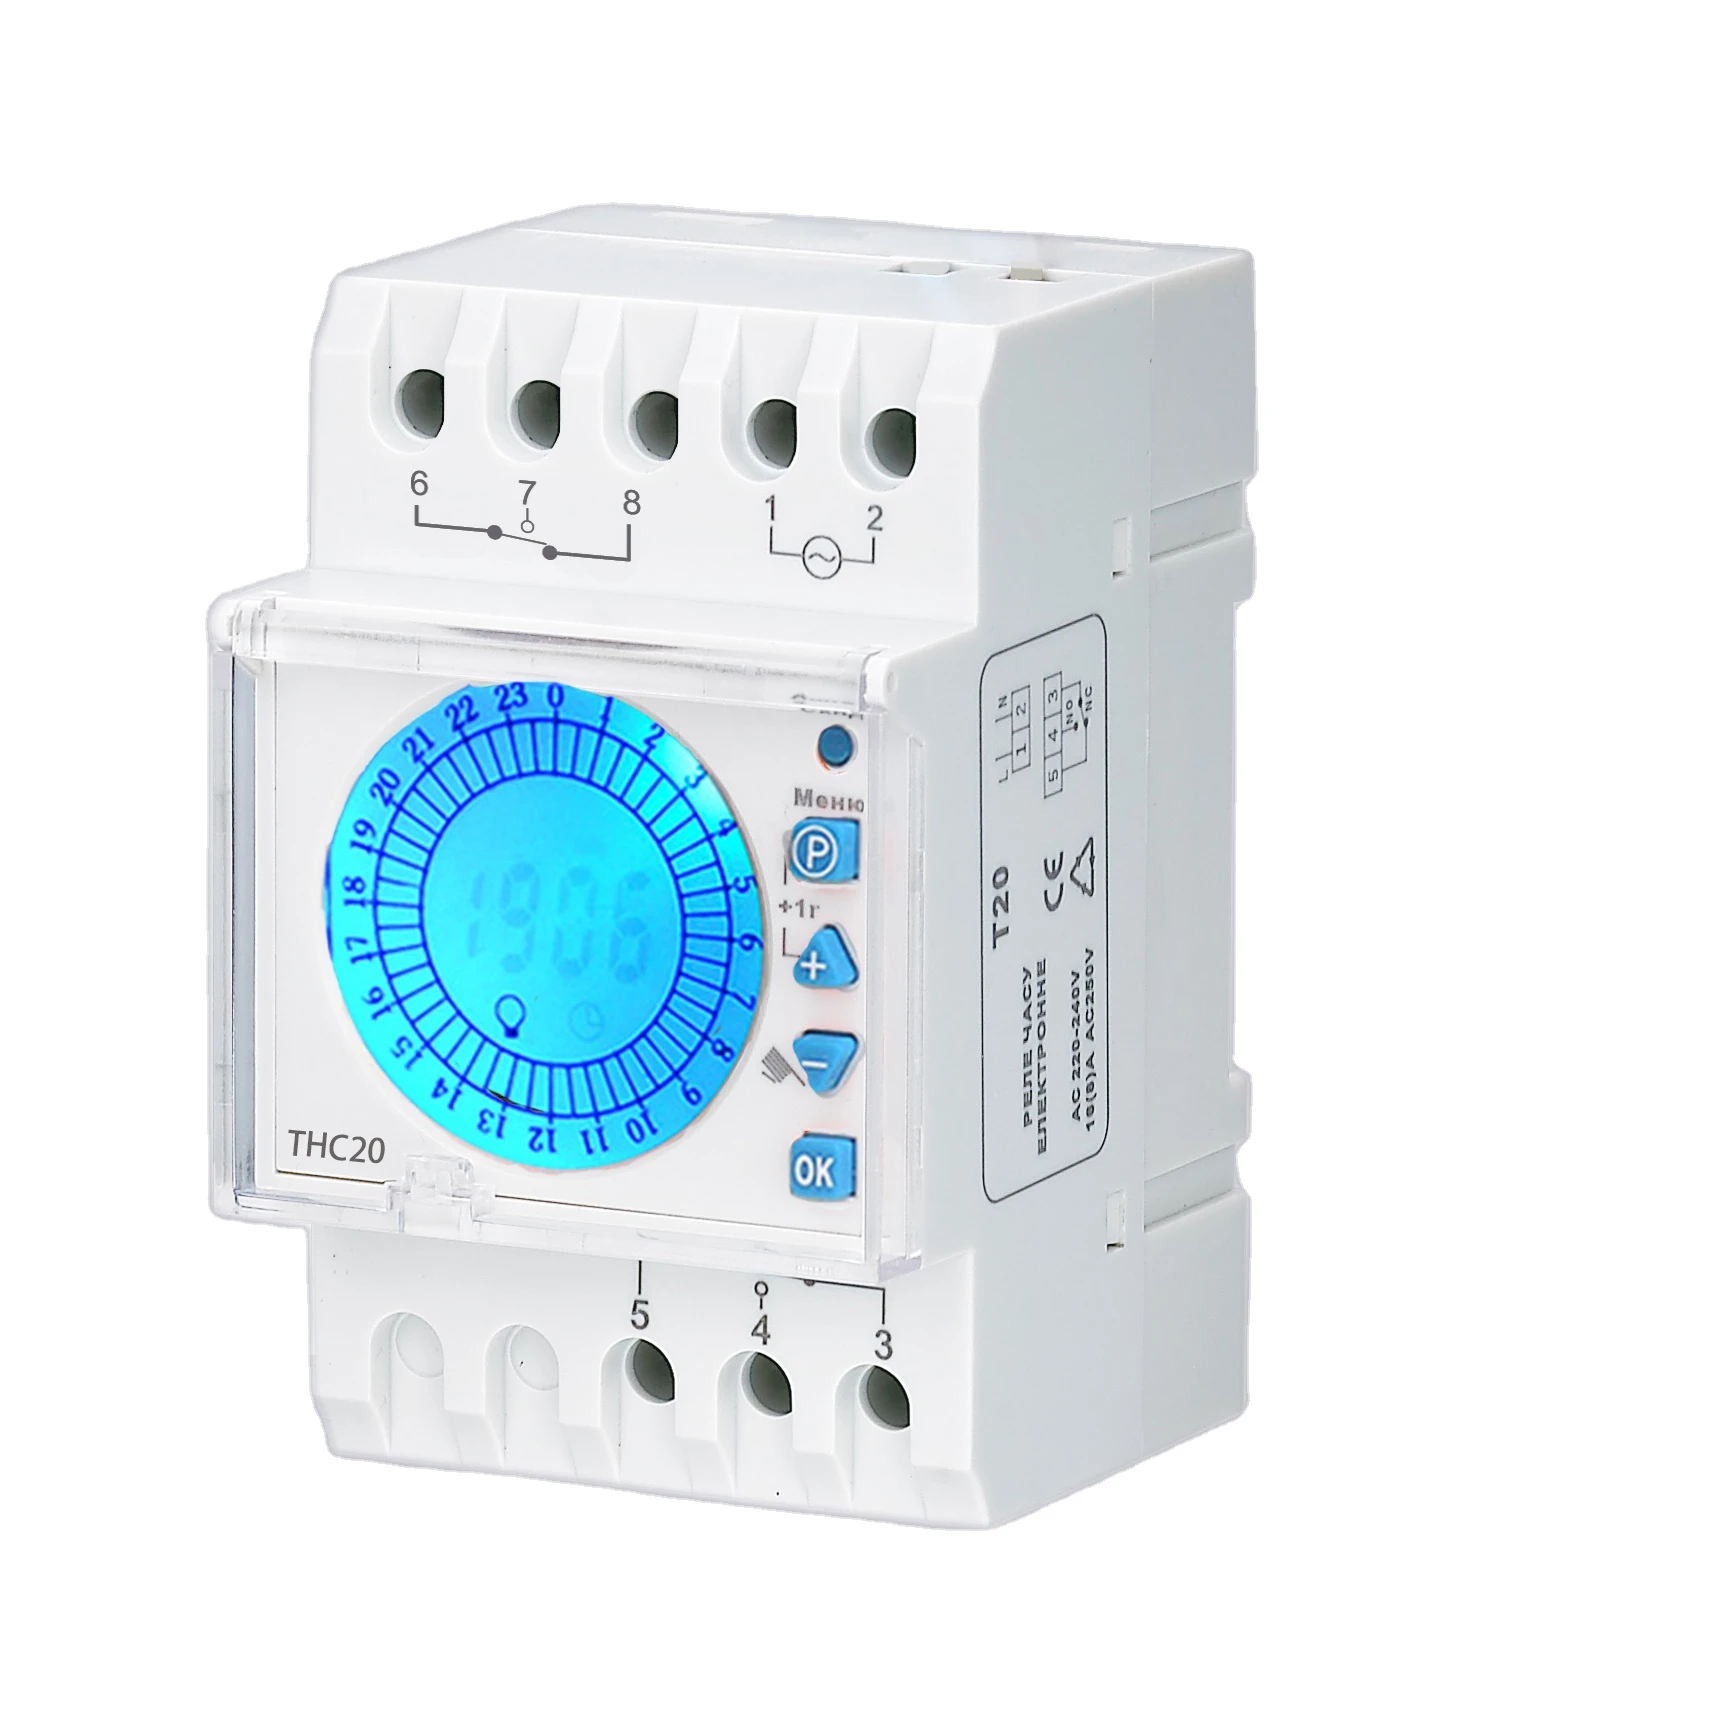 2 loads electrics control  timer switch  THC20-2C  20amp digital  back light LCD  periodic timer control